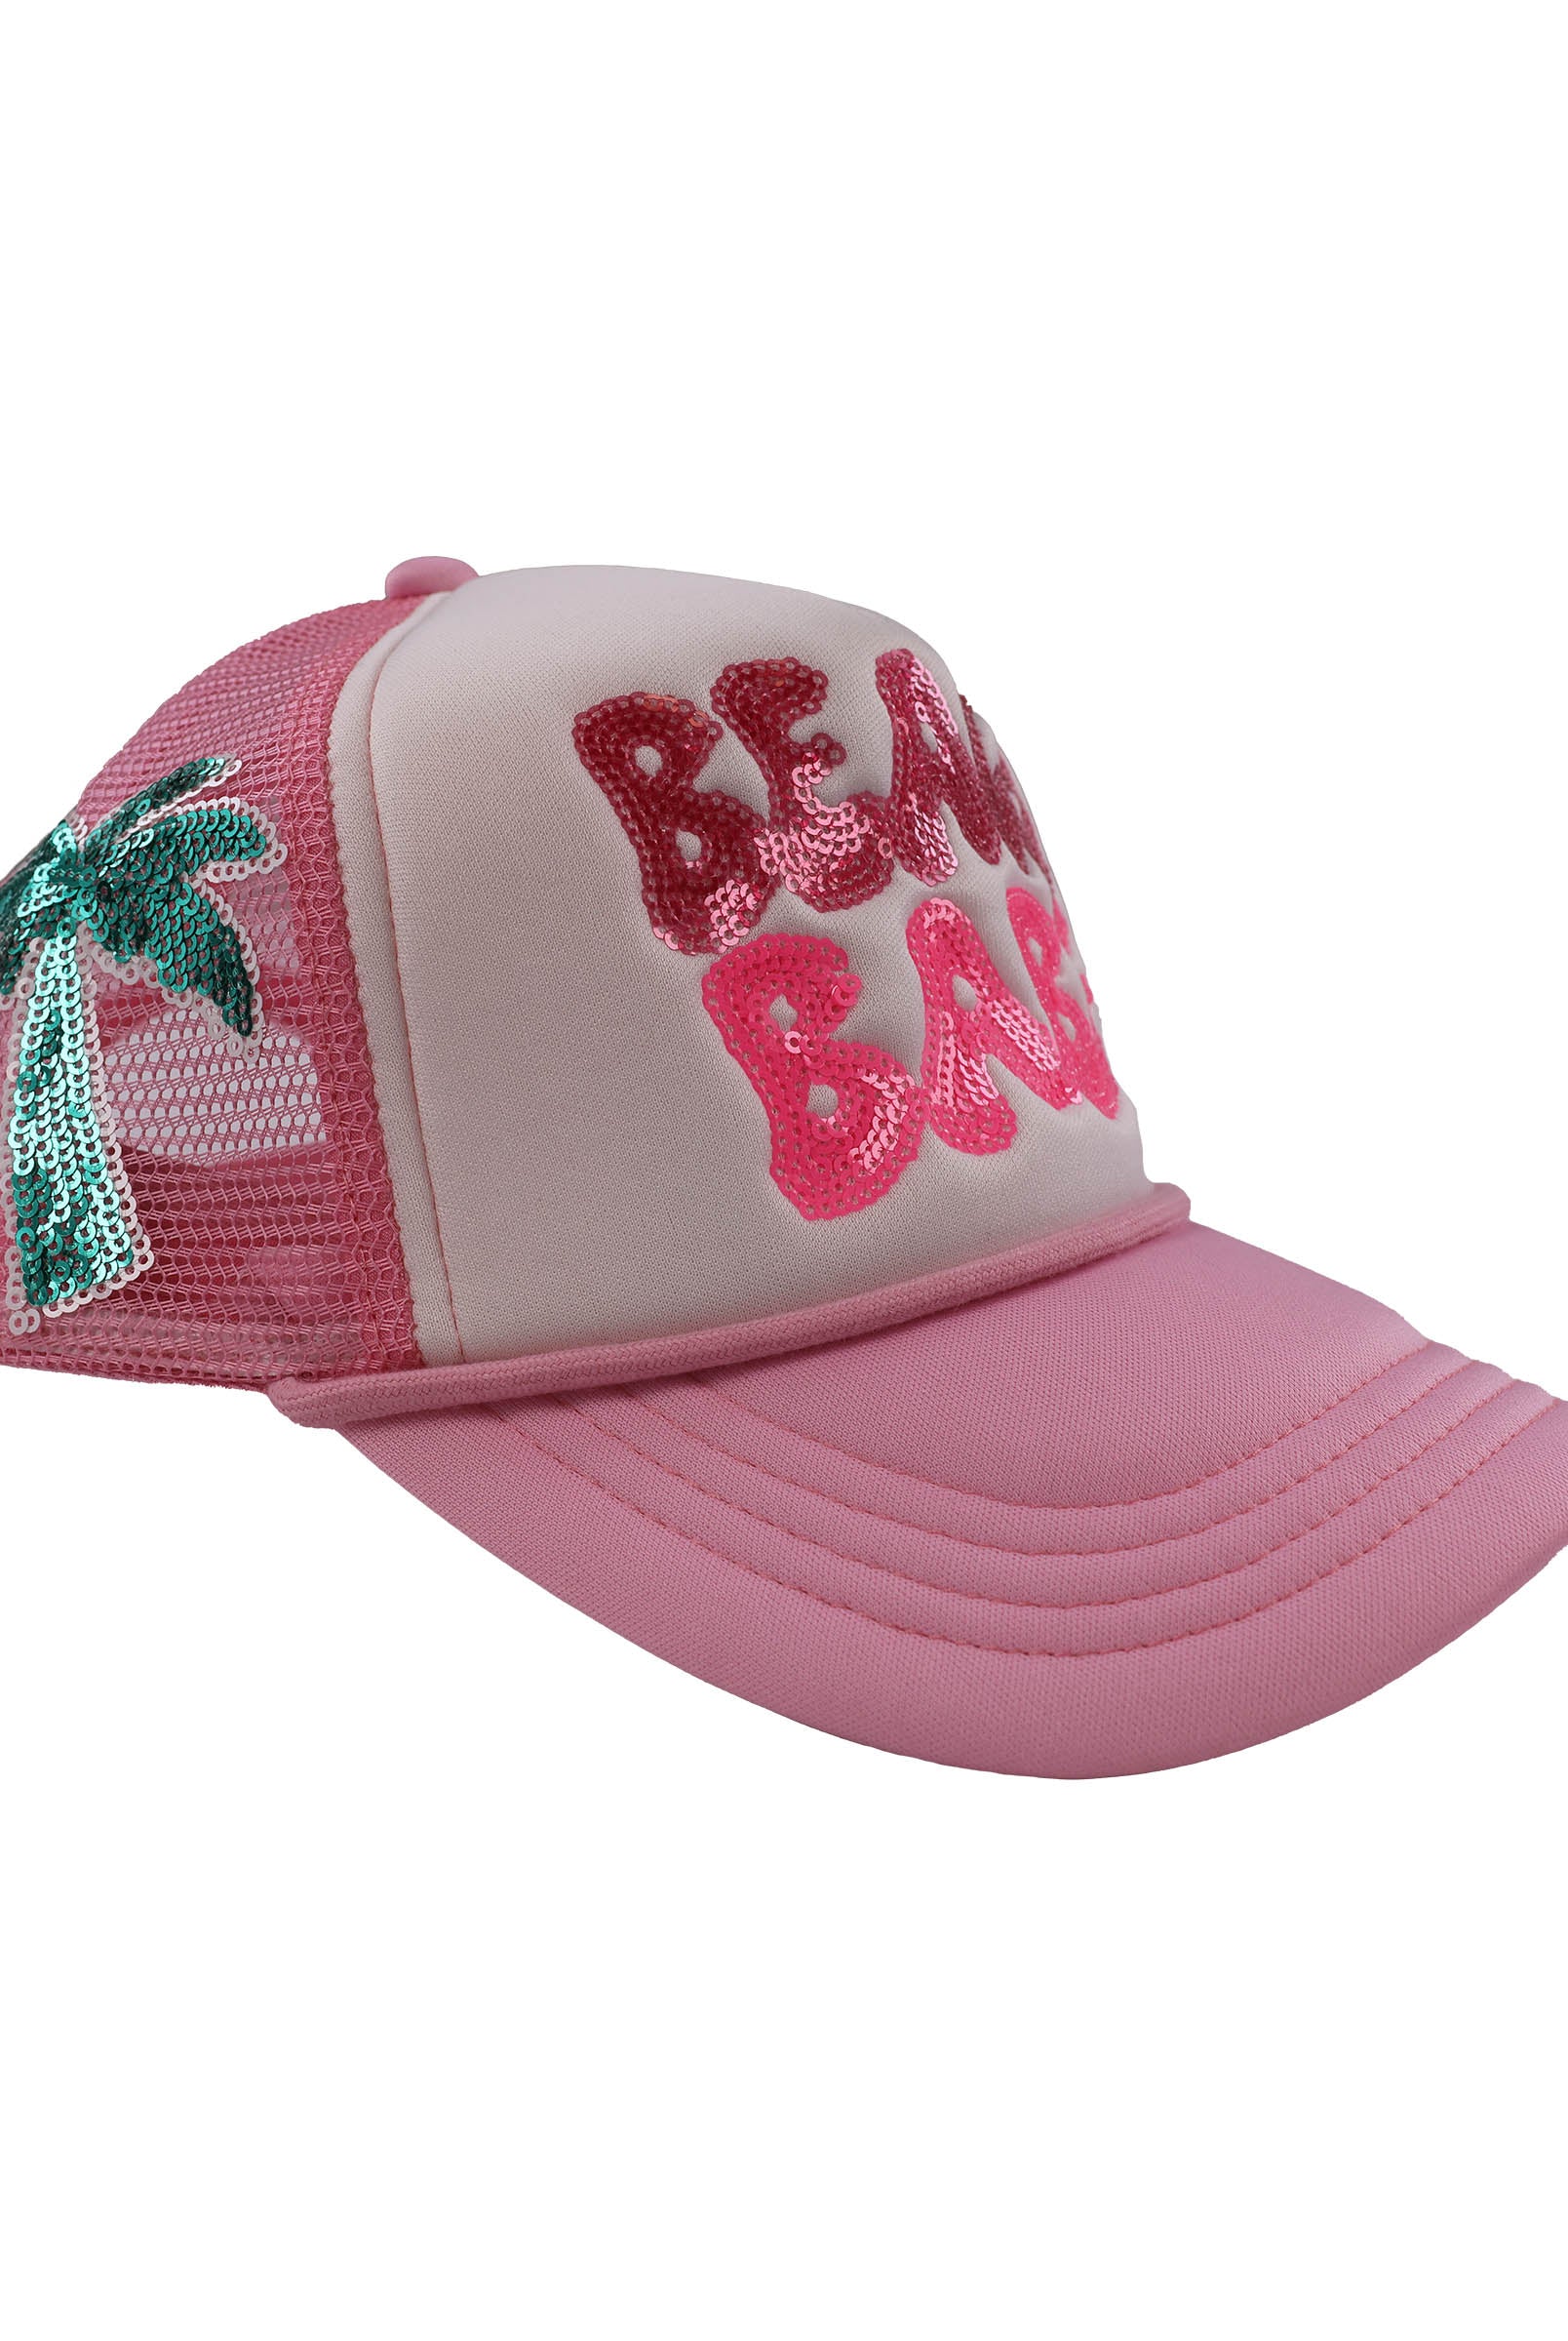 SS Beach Babe Cap-Hats-Deadwood South Boutique & Company-Deadwood South Boutique, Women's Fashion Boutique in Henderson, TX